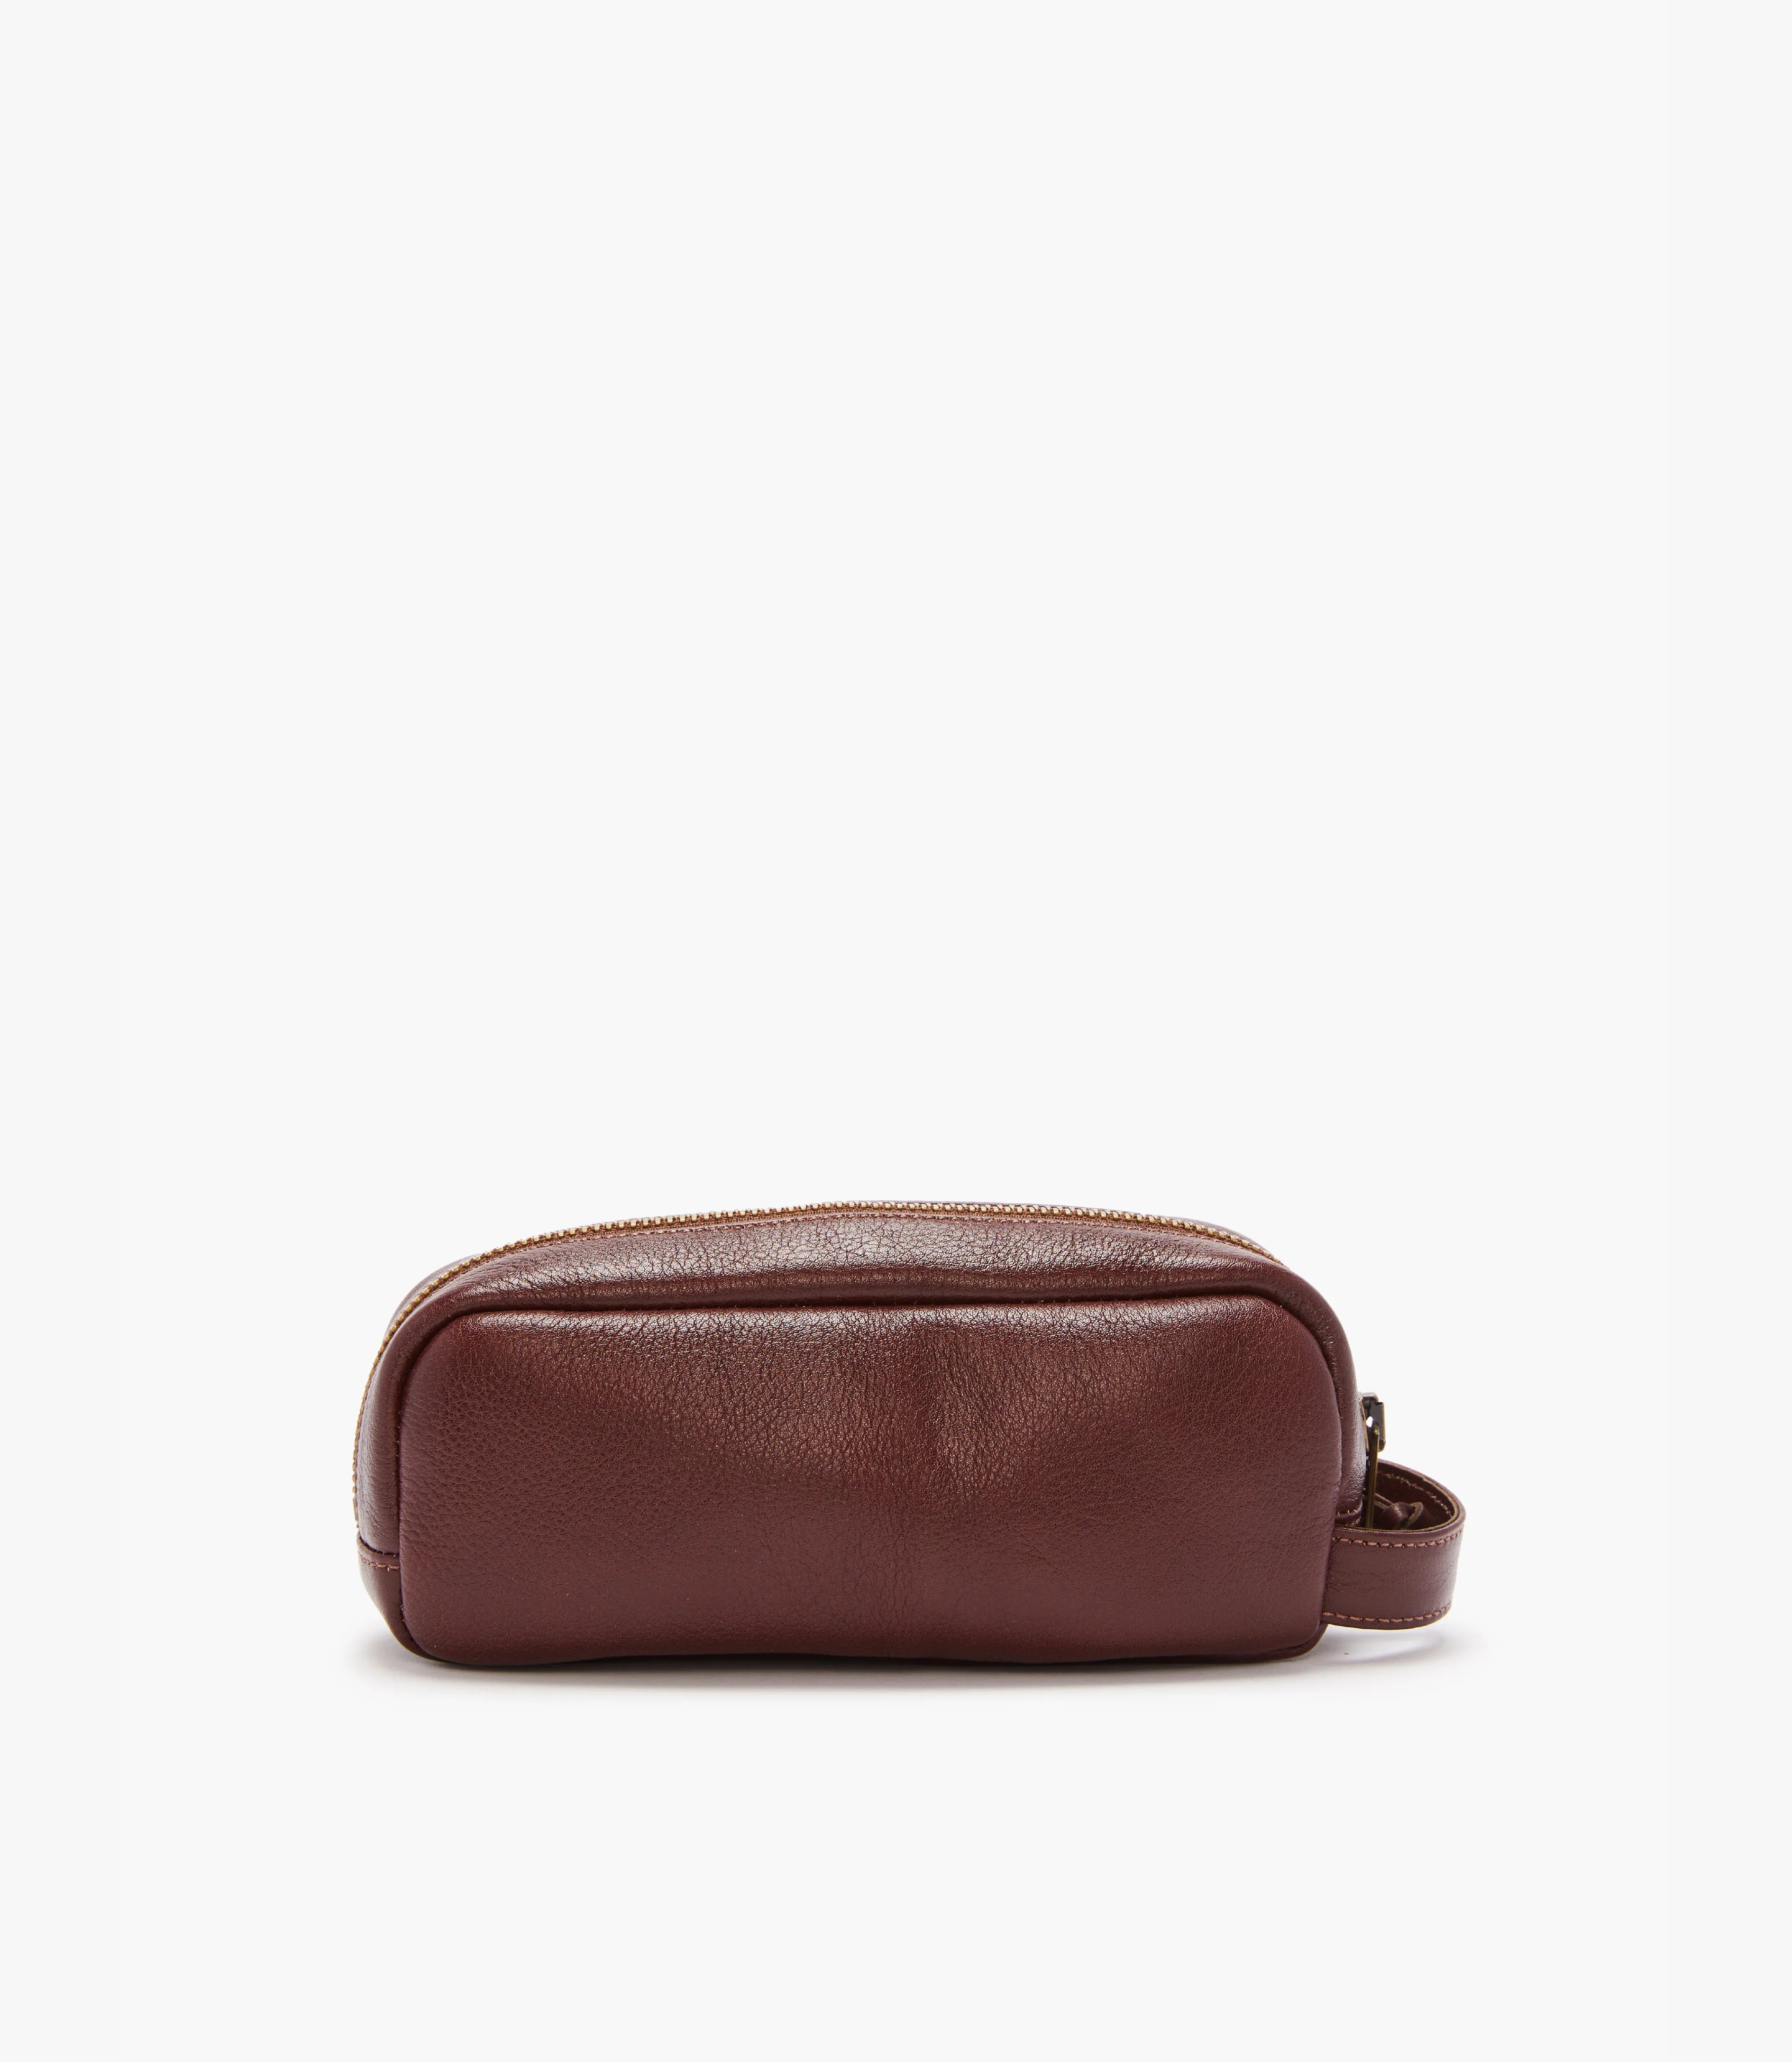 Leather Travel Care Kit - Vintage Brown